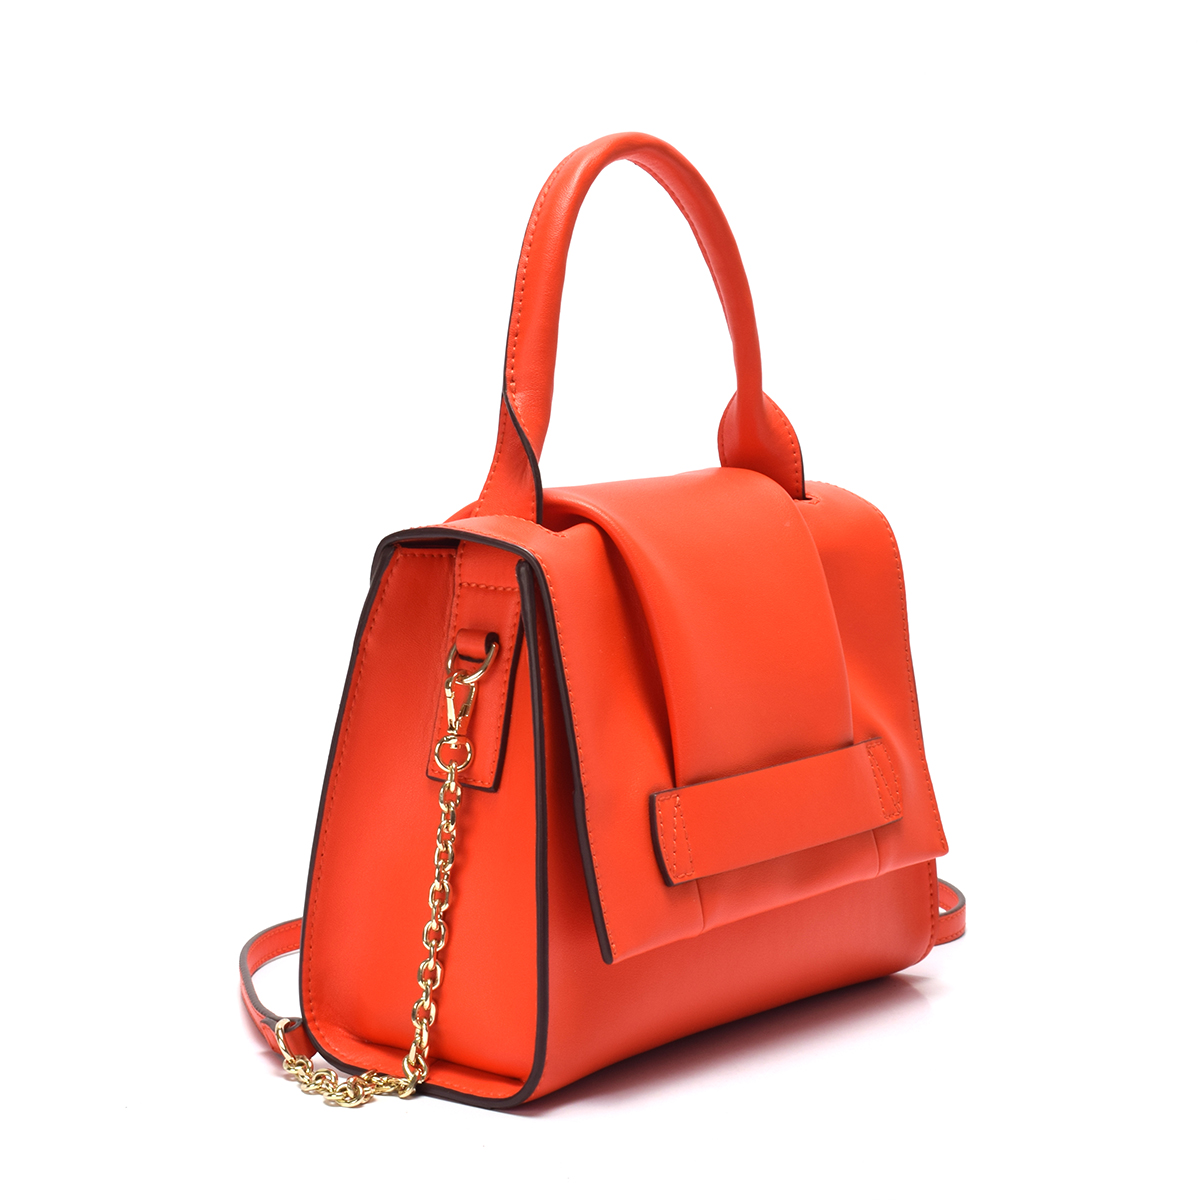 Sanlly oem handbags company for shopping-1